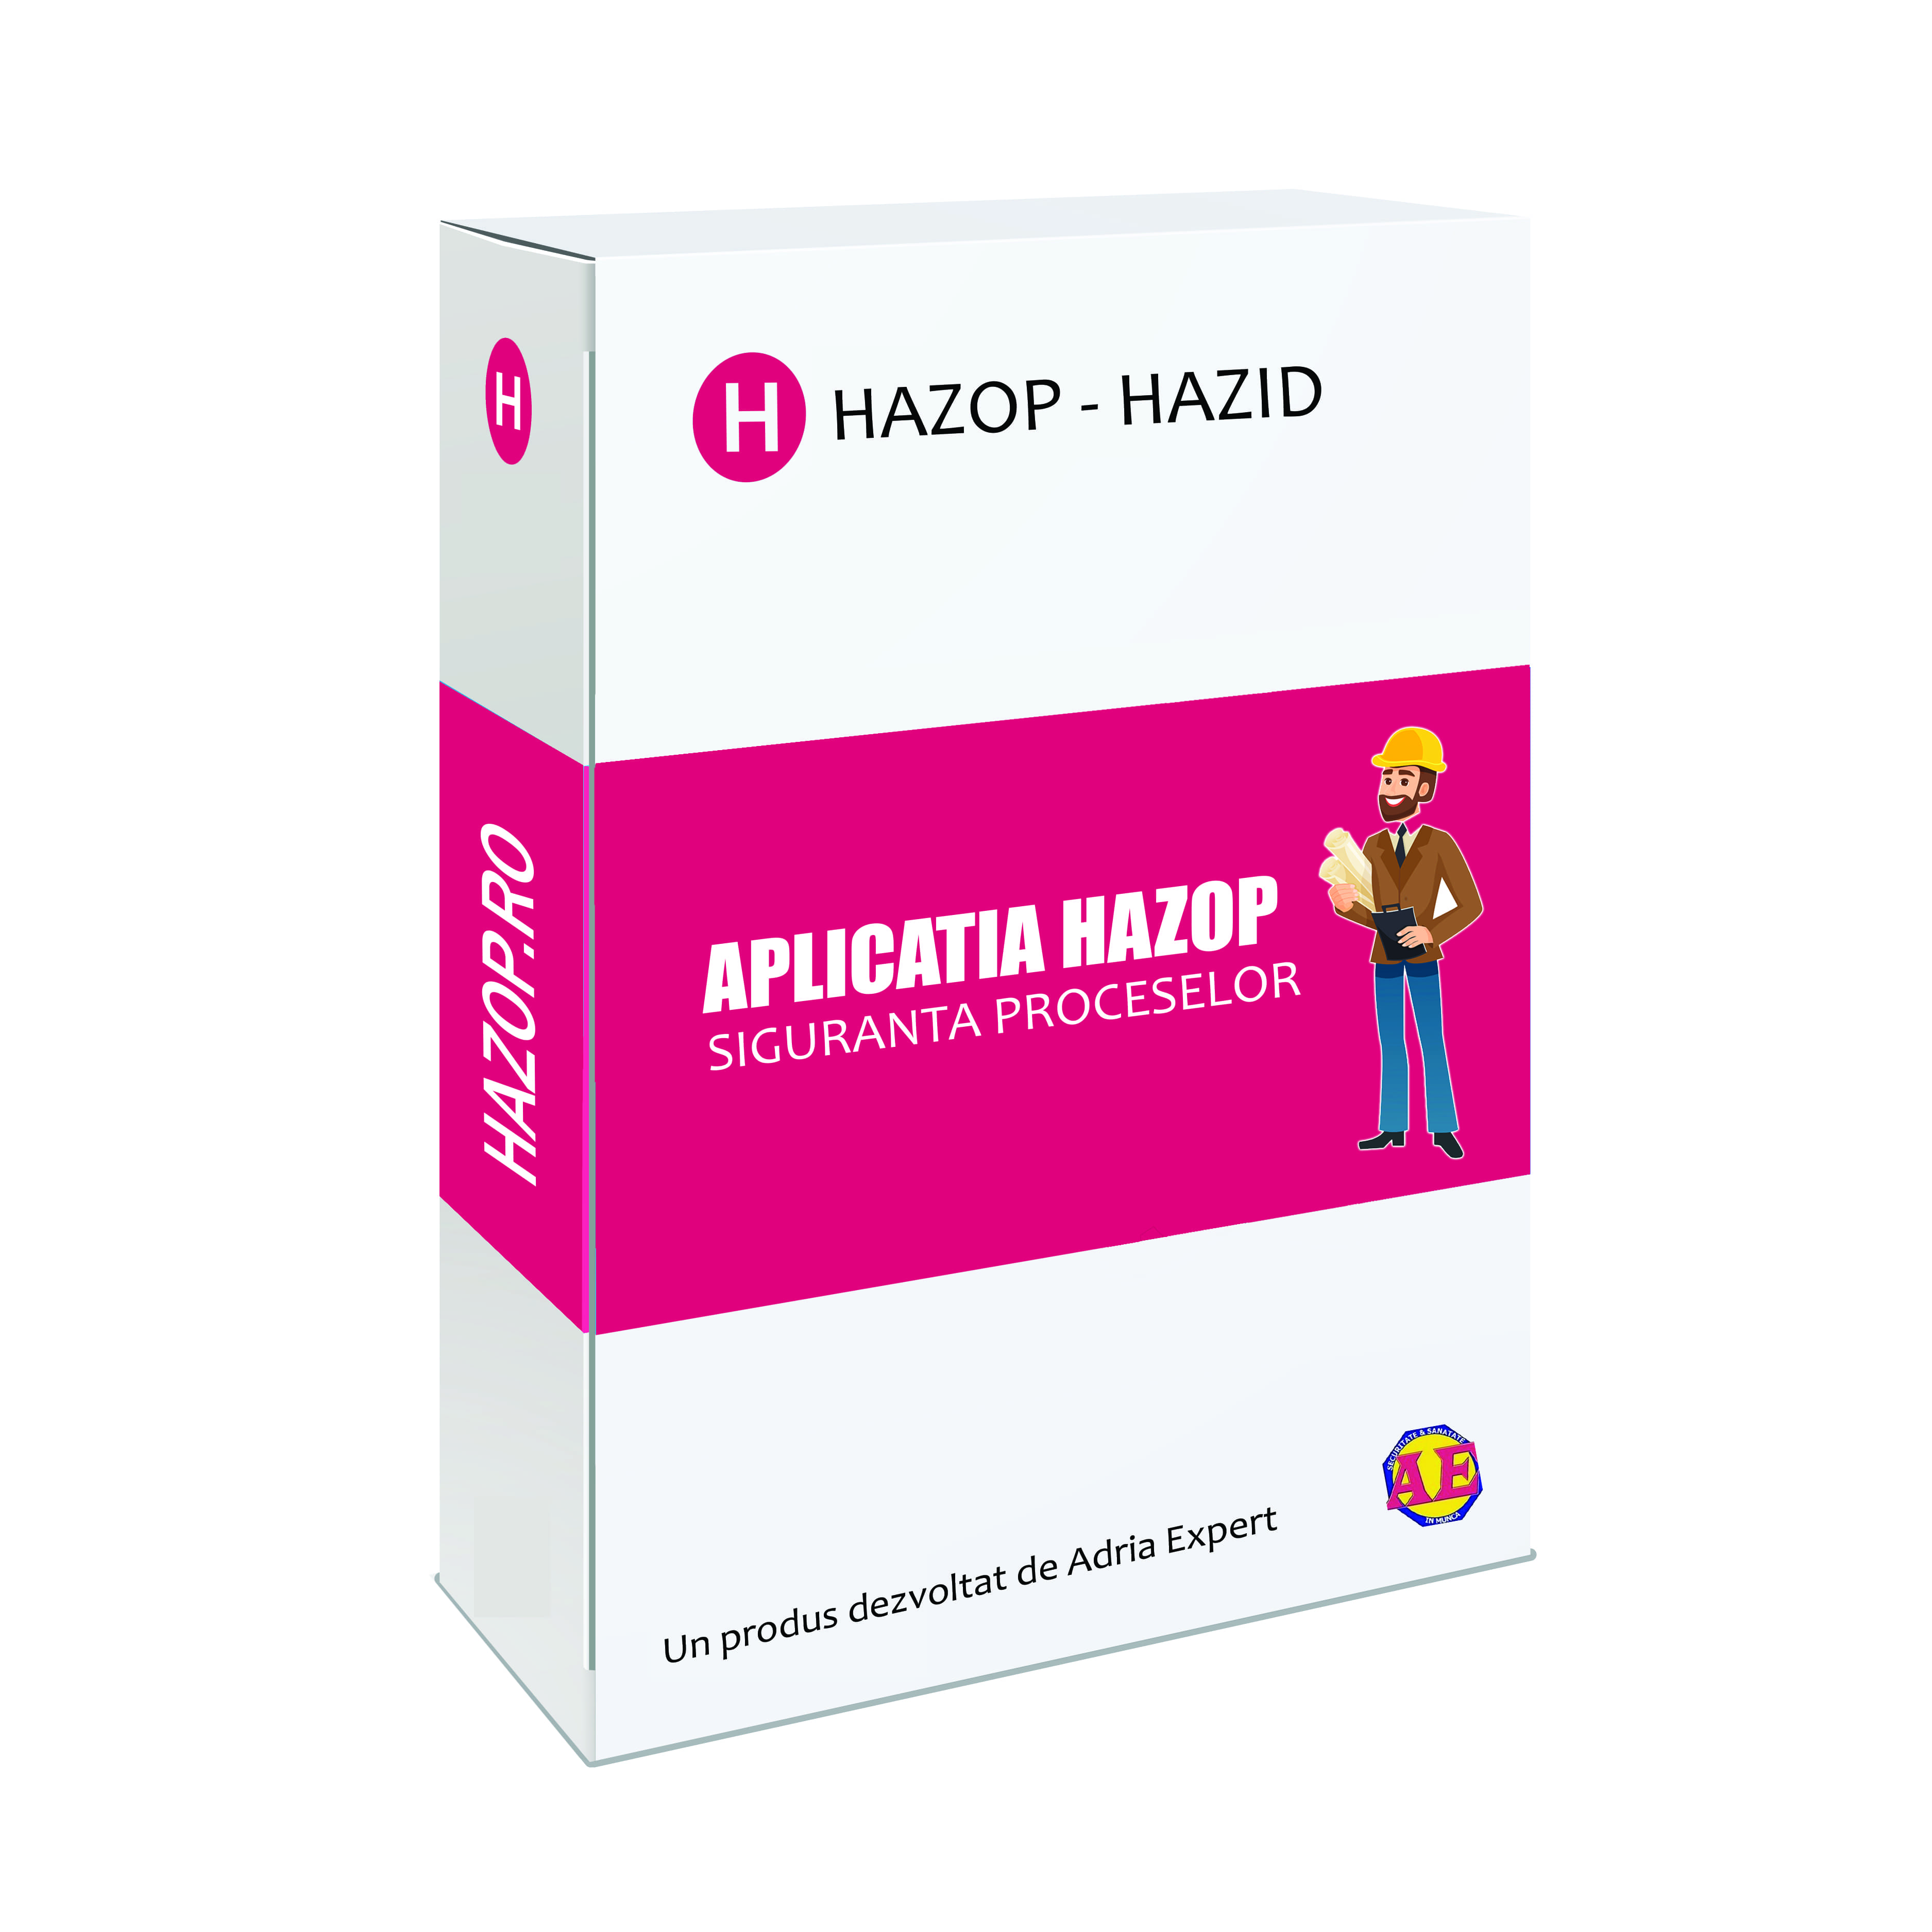 Hazop Hazid SOFTWARE- Process Safety